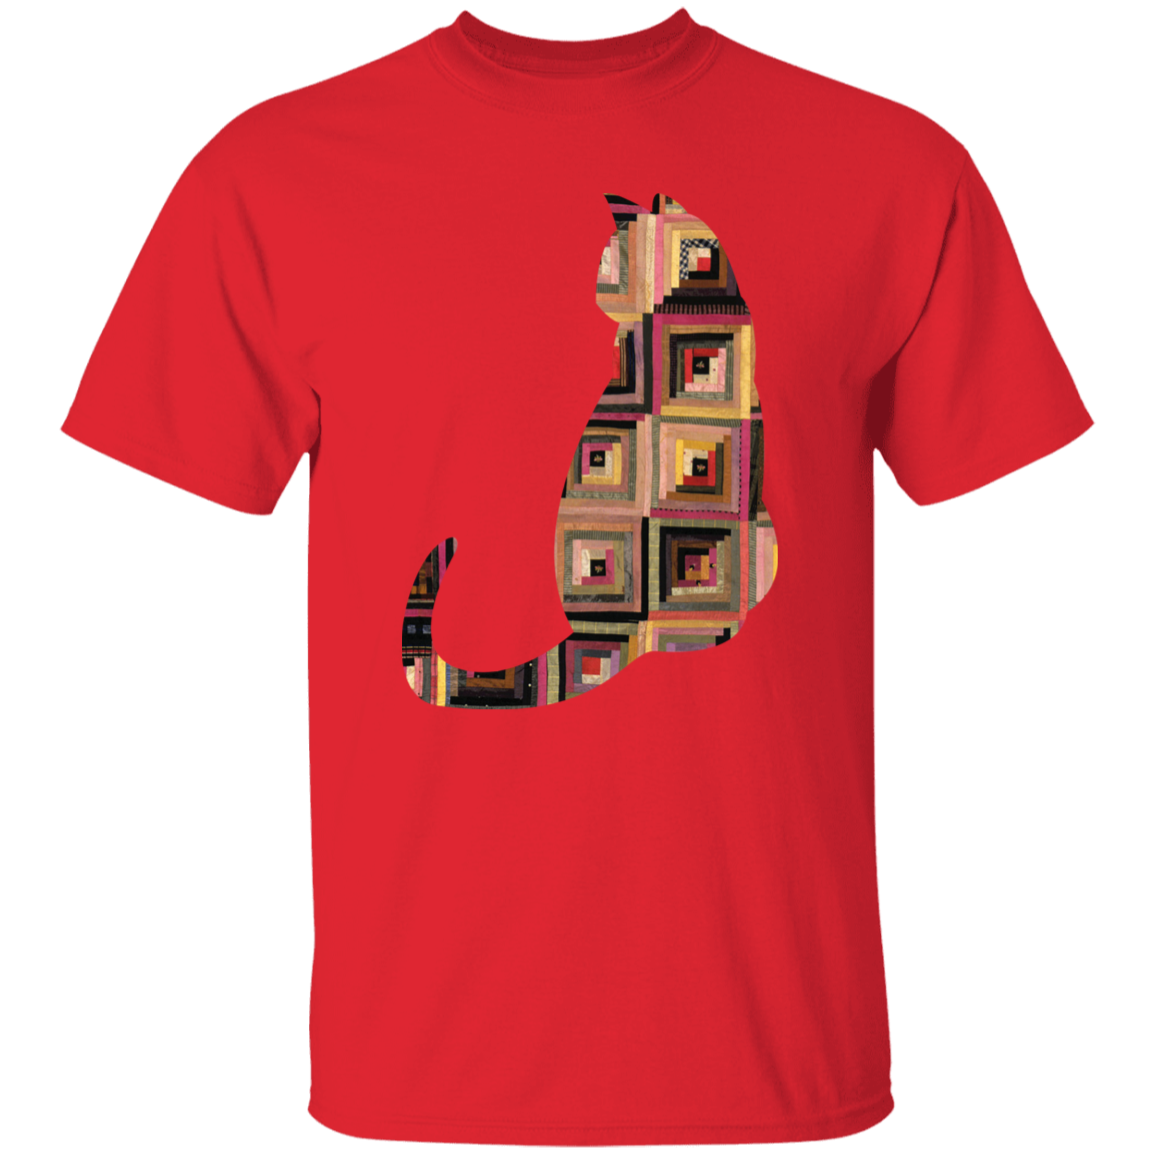 Log Cabin Cat T-Shirt